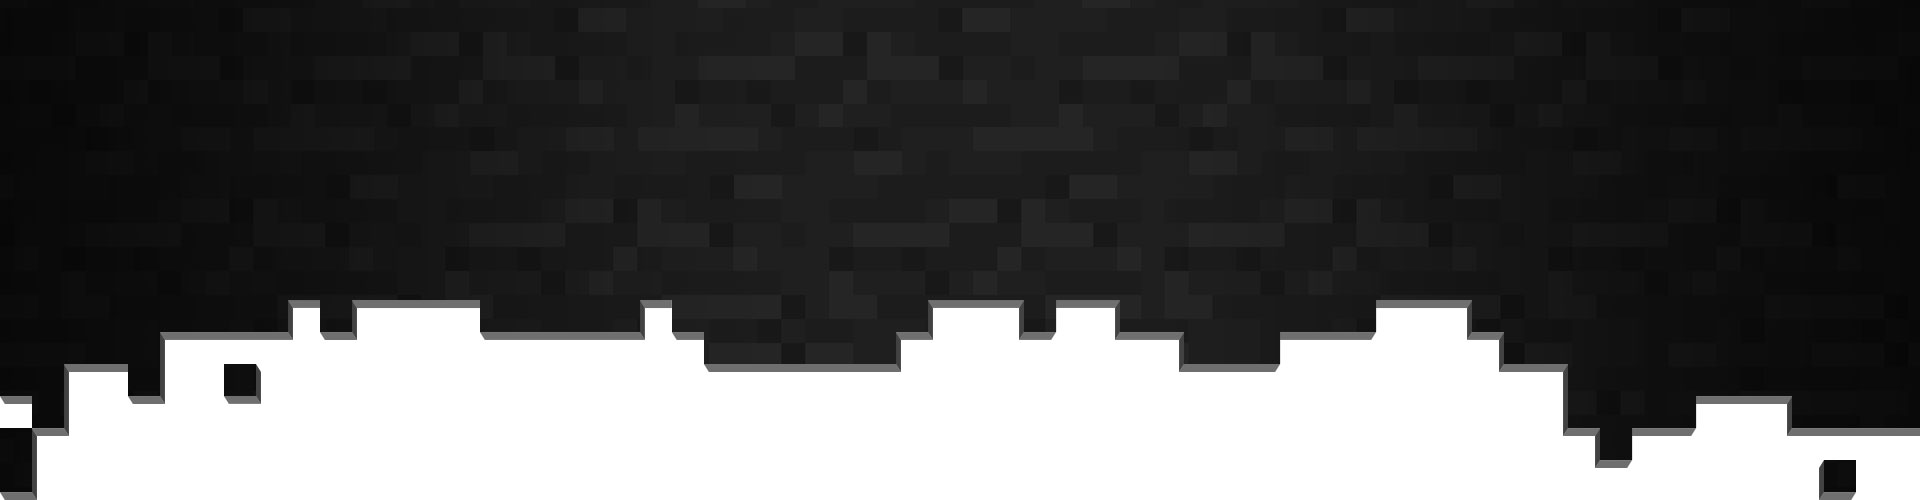 Black and gray pixels